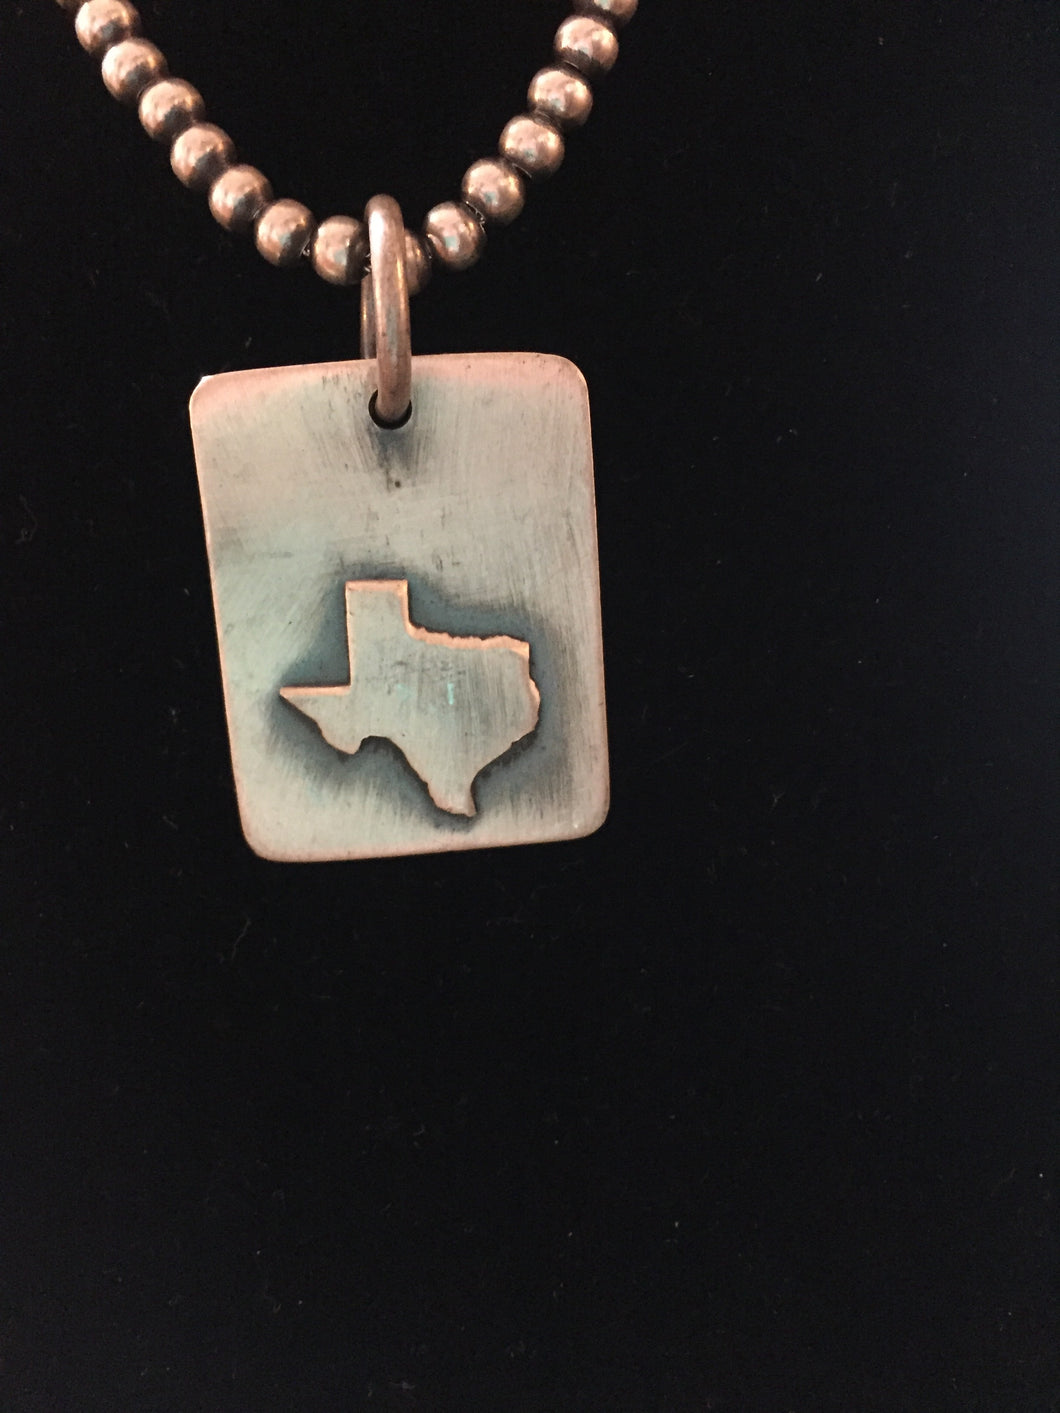 Texas Sterling silver charm